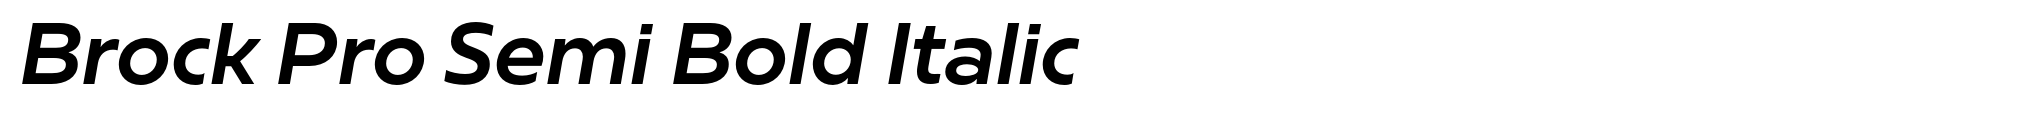 Brock Pro Semi Bold Italic image